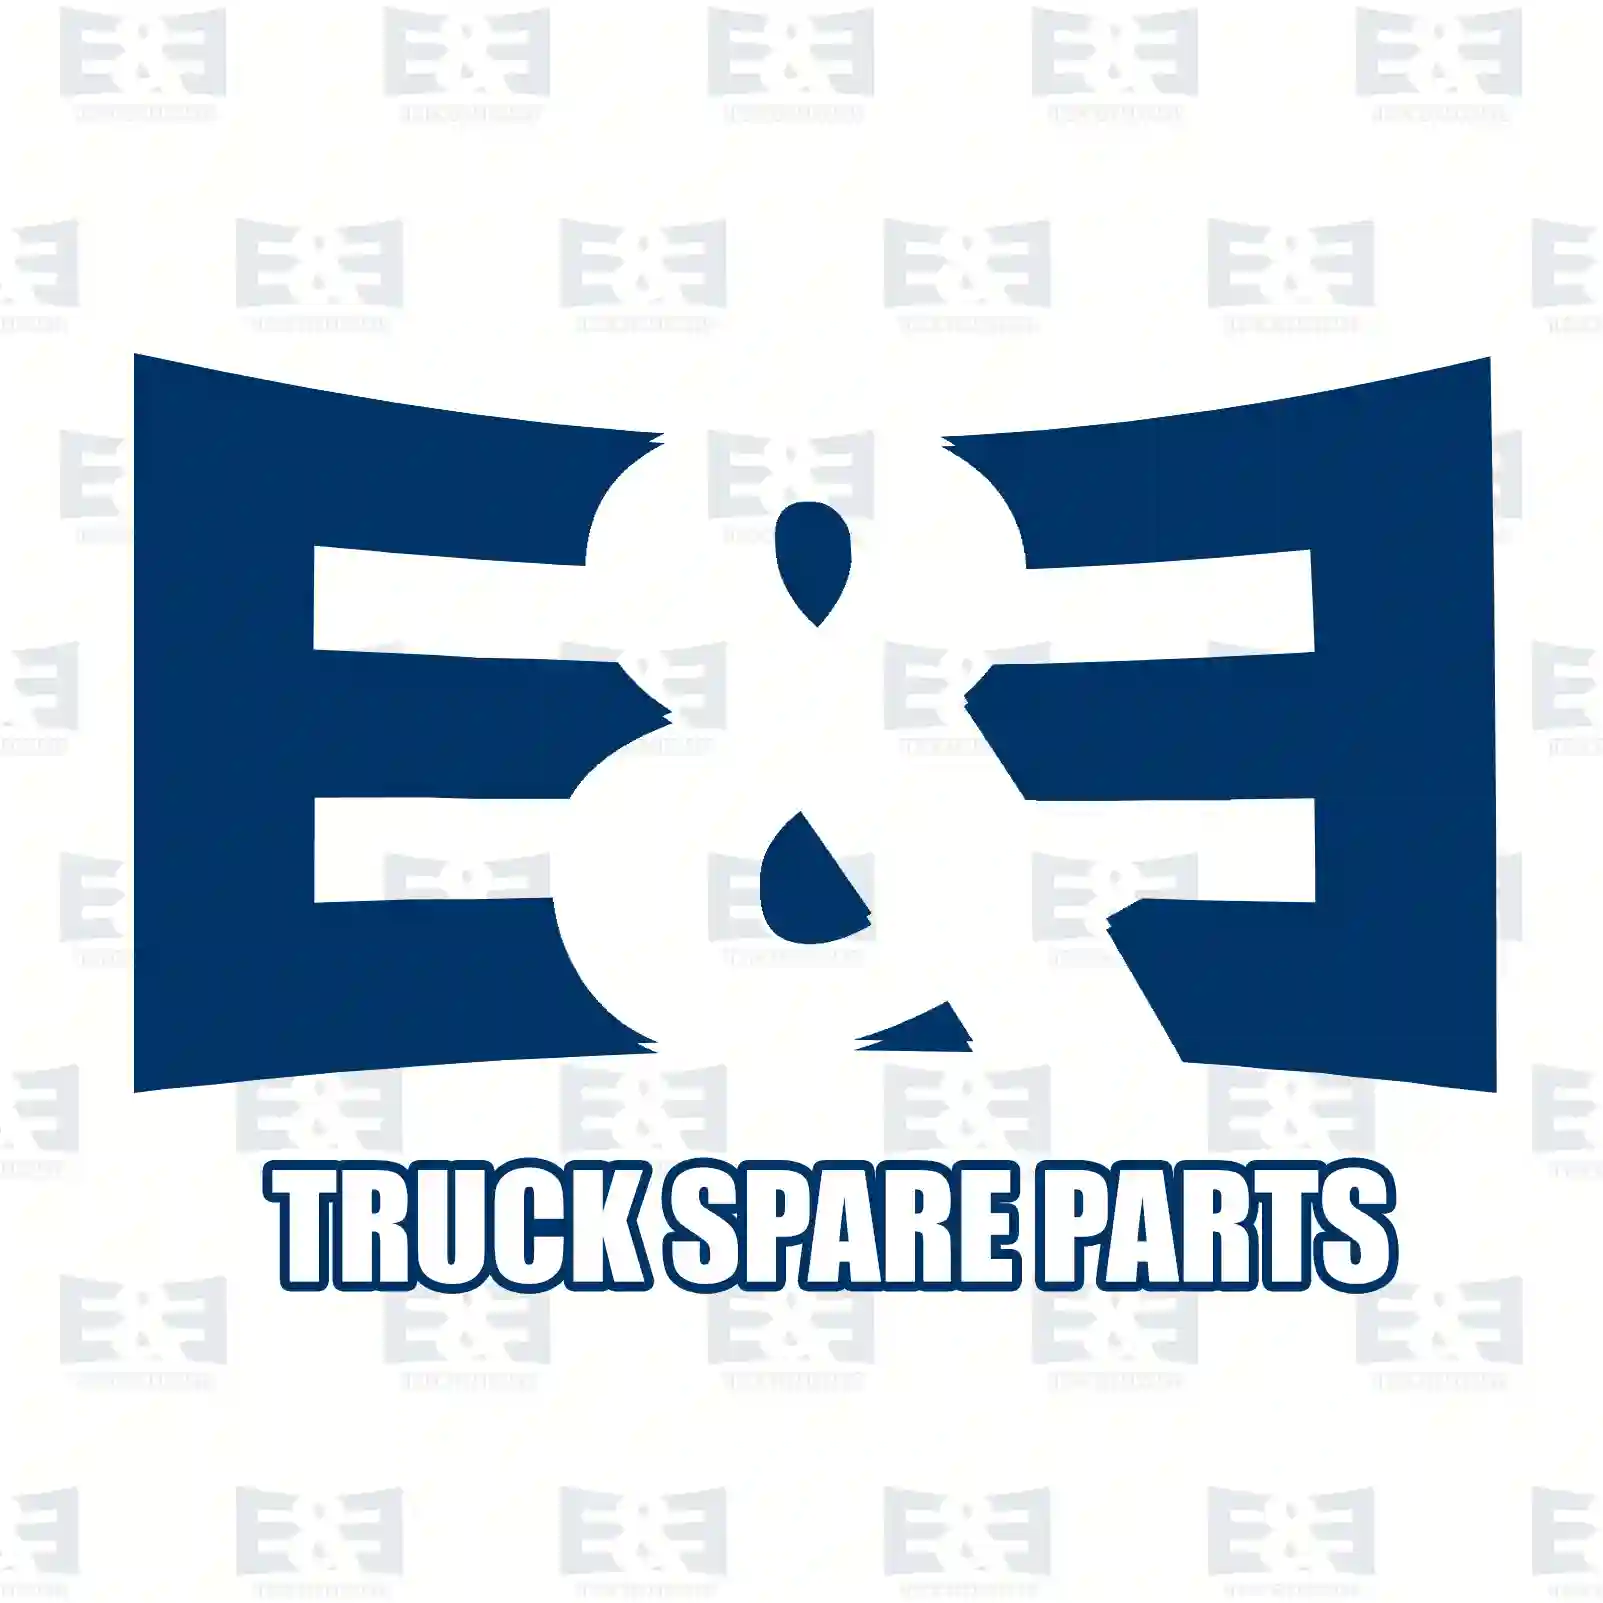 Fan Fan with clutch, EE No 2E2201021 ,  oem no:7420923583, 20765694, 21377002 E&E Truck Spare Parts | Truck Spare Parts, Auotomotive Spare Parts